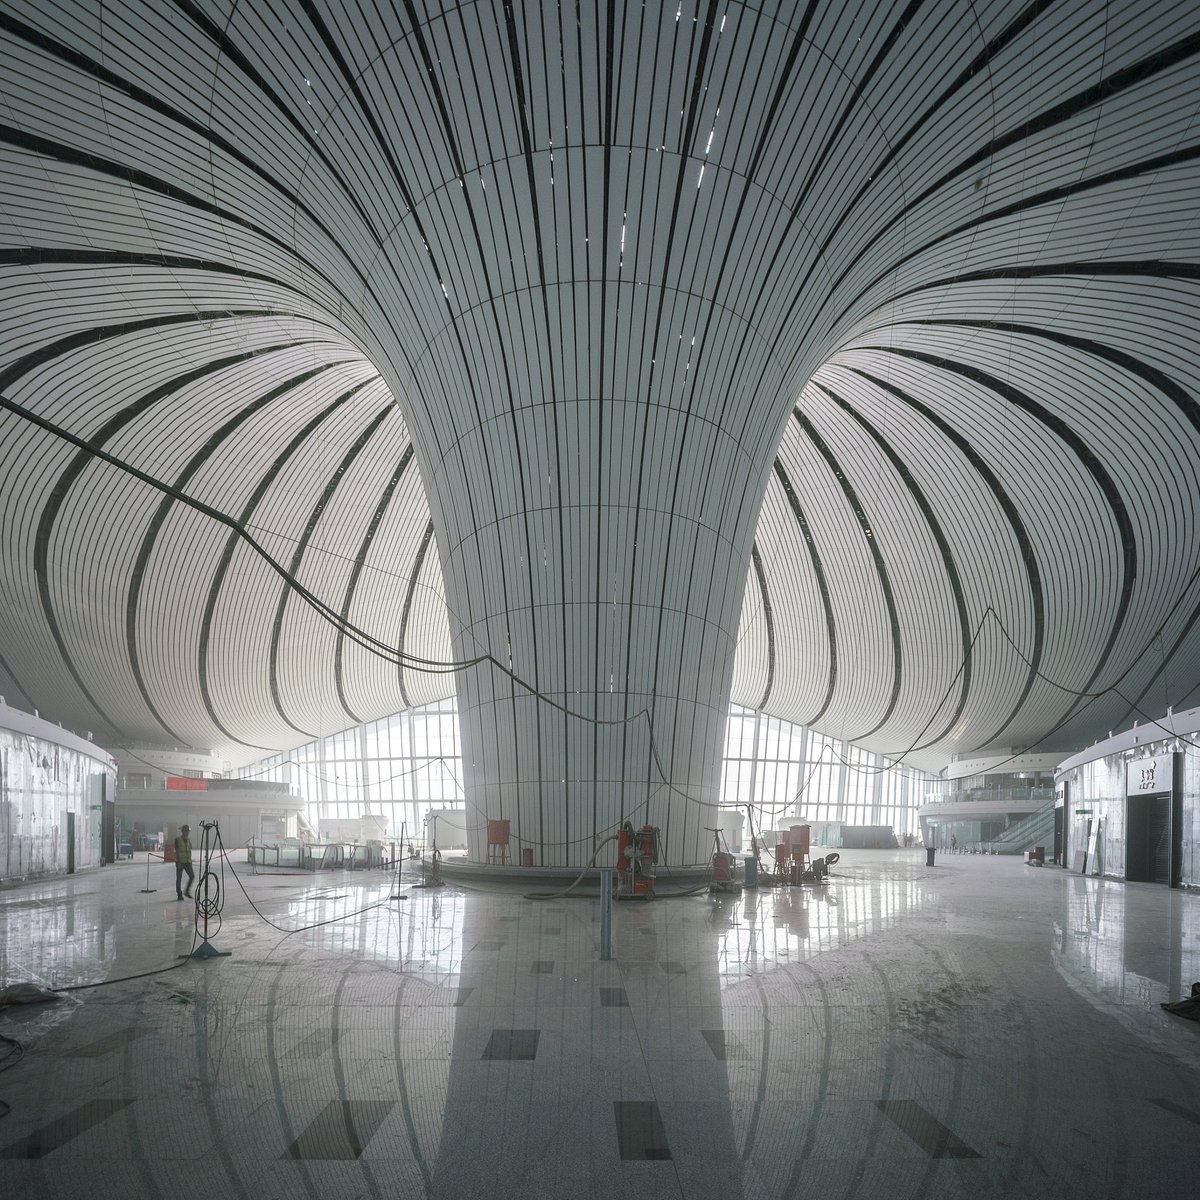 New beijing. Аэропорт Пекин Дасин. Пекин Дасин, Международный аэропорт, Китай. Аэропорт Шоуду Пекин. Заха Хадид Пекинский аэропорт.